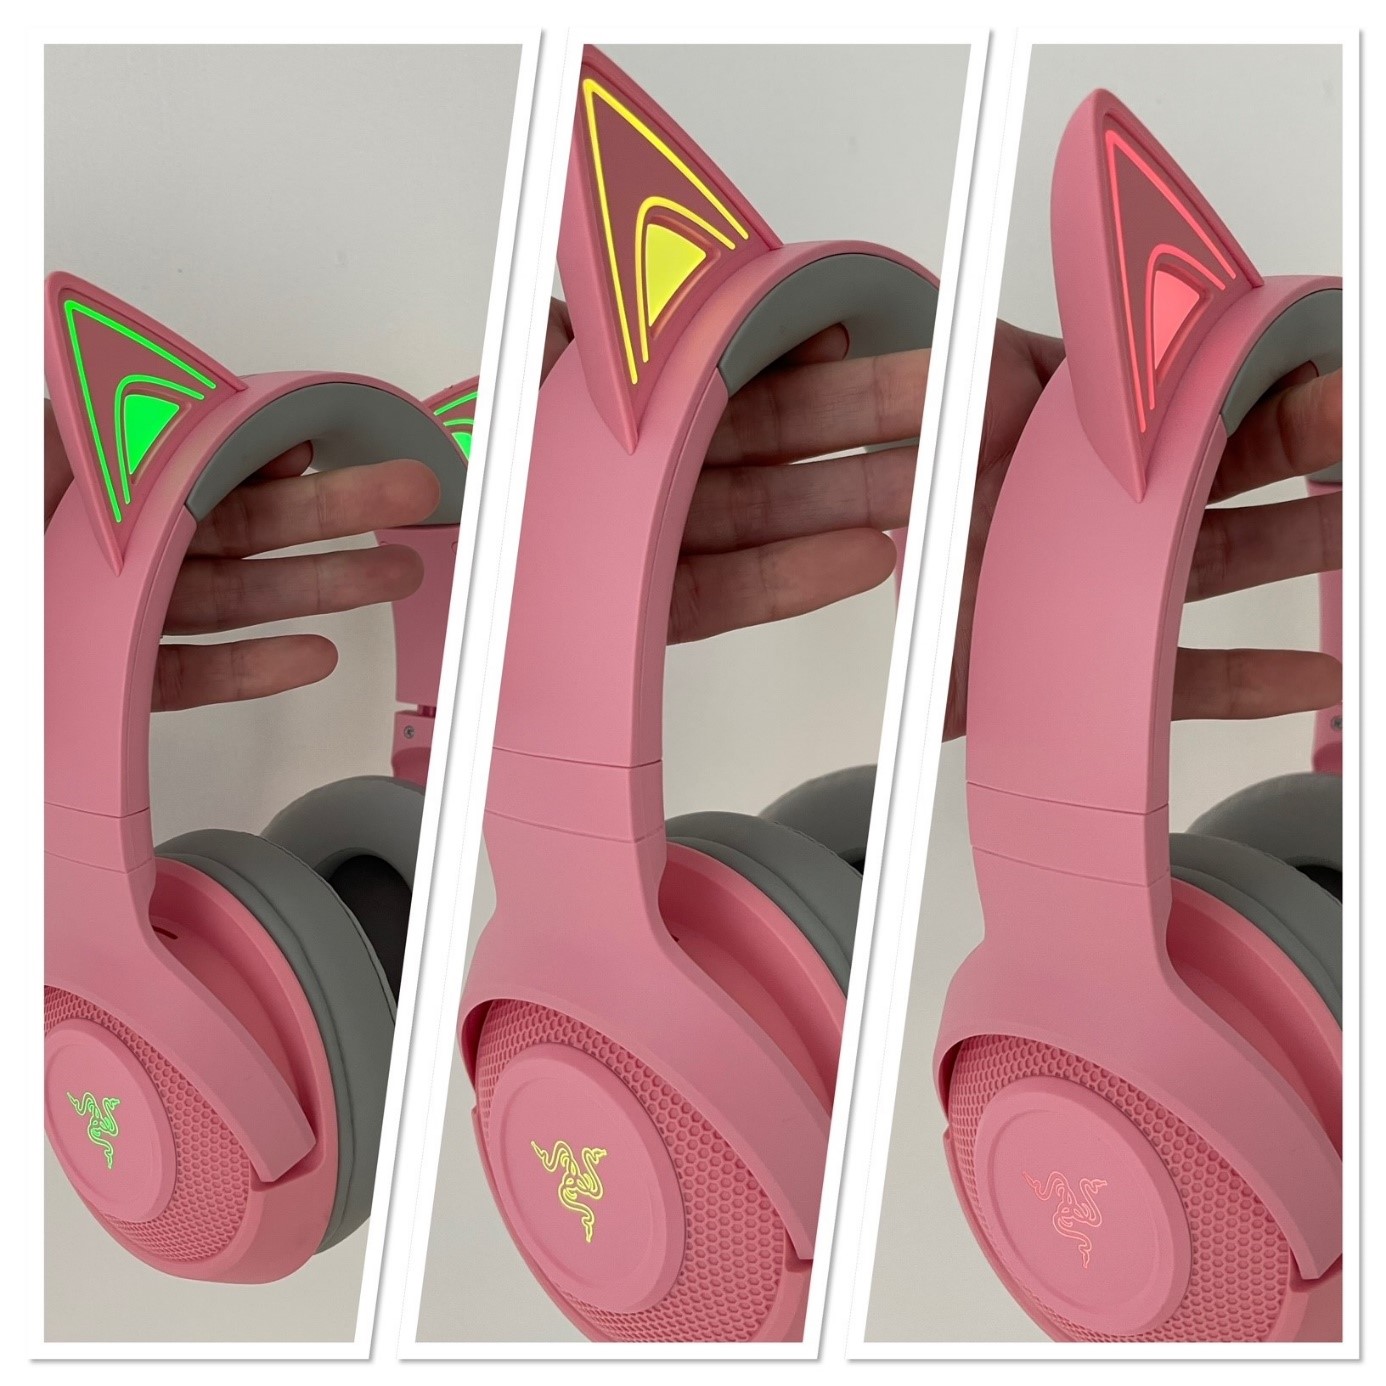 Razer Micro-Casques Gaming Sans Fil Kraken Hello Kitty Edition Rose